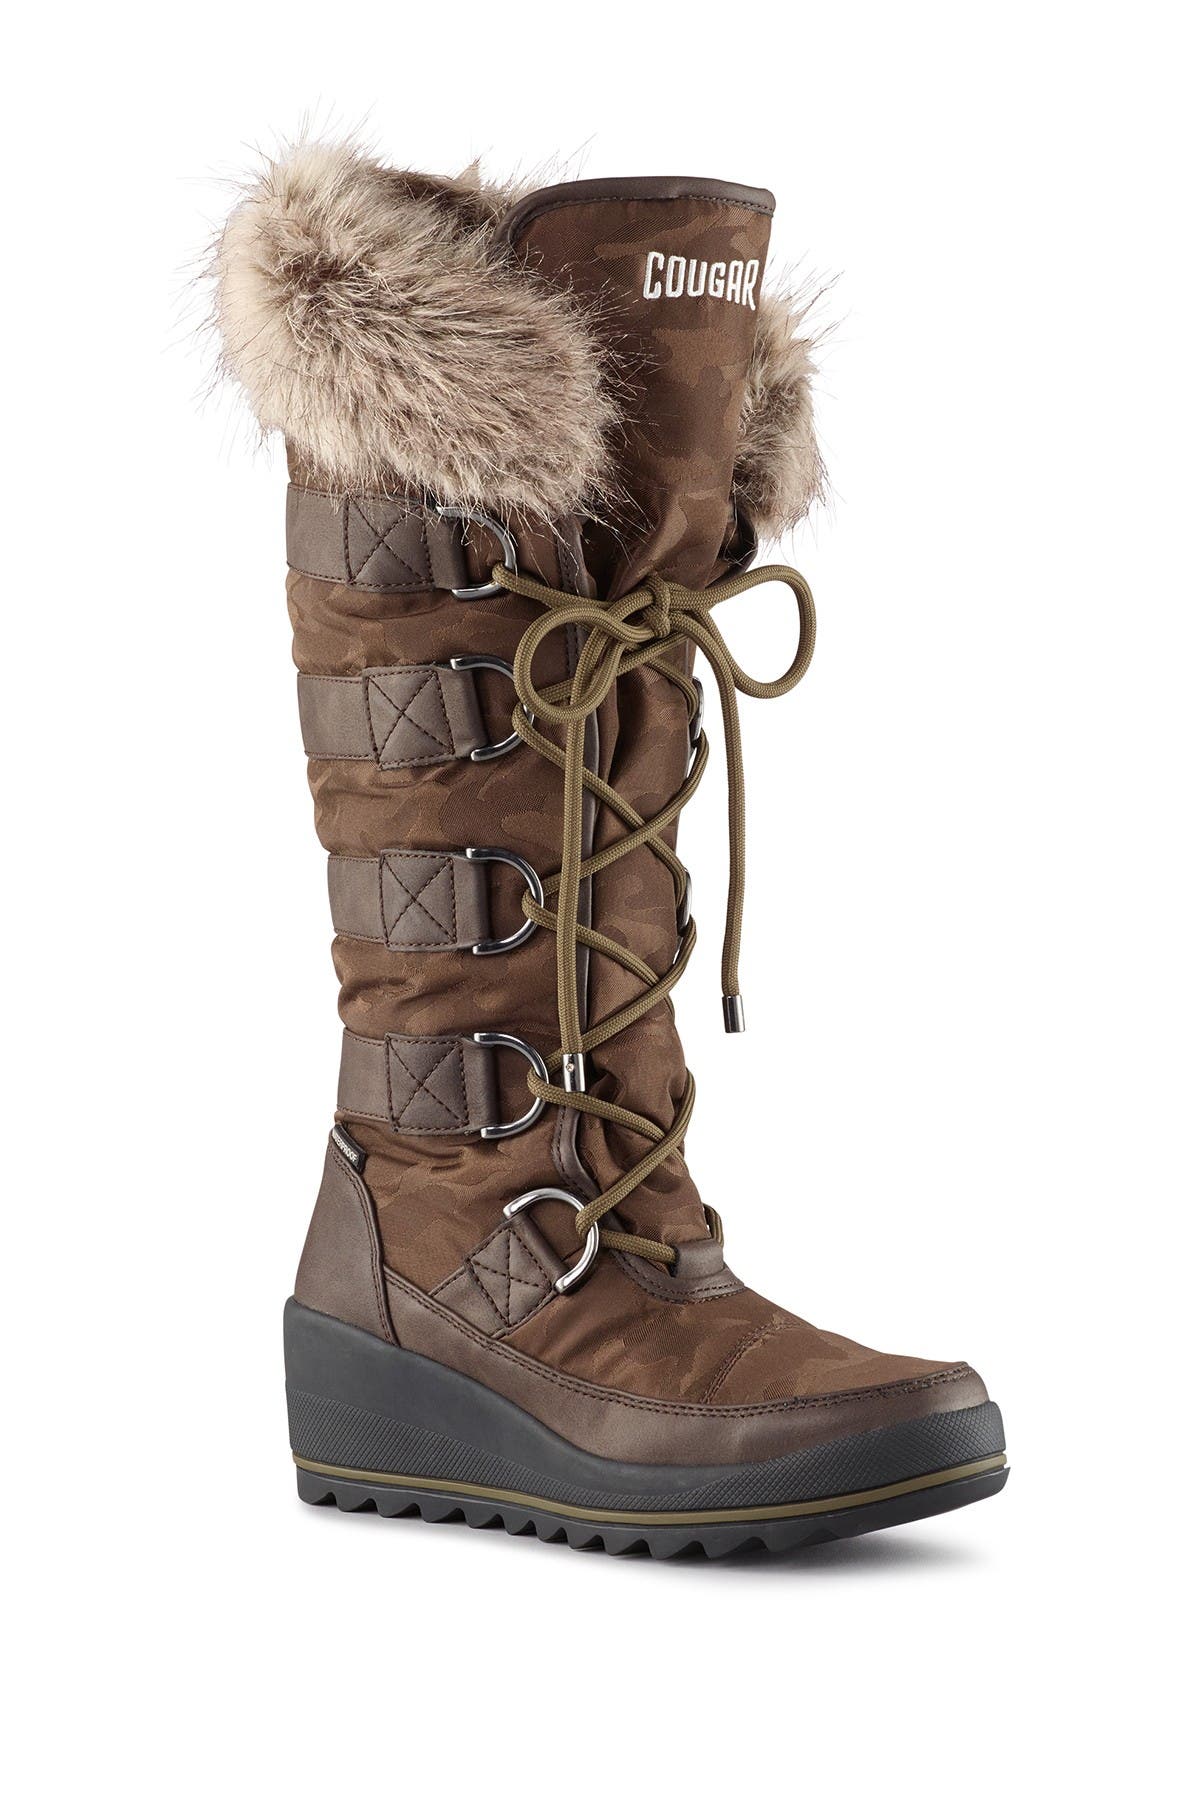 cougar lancaster snow boot